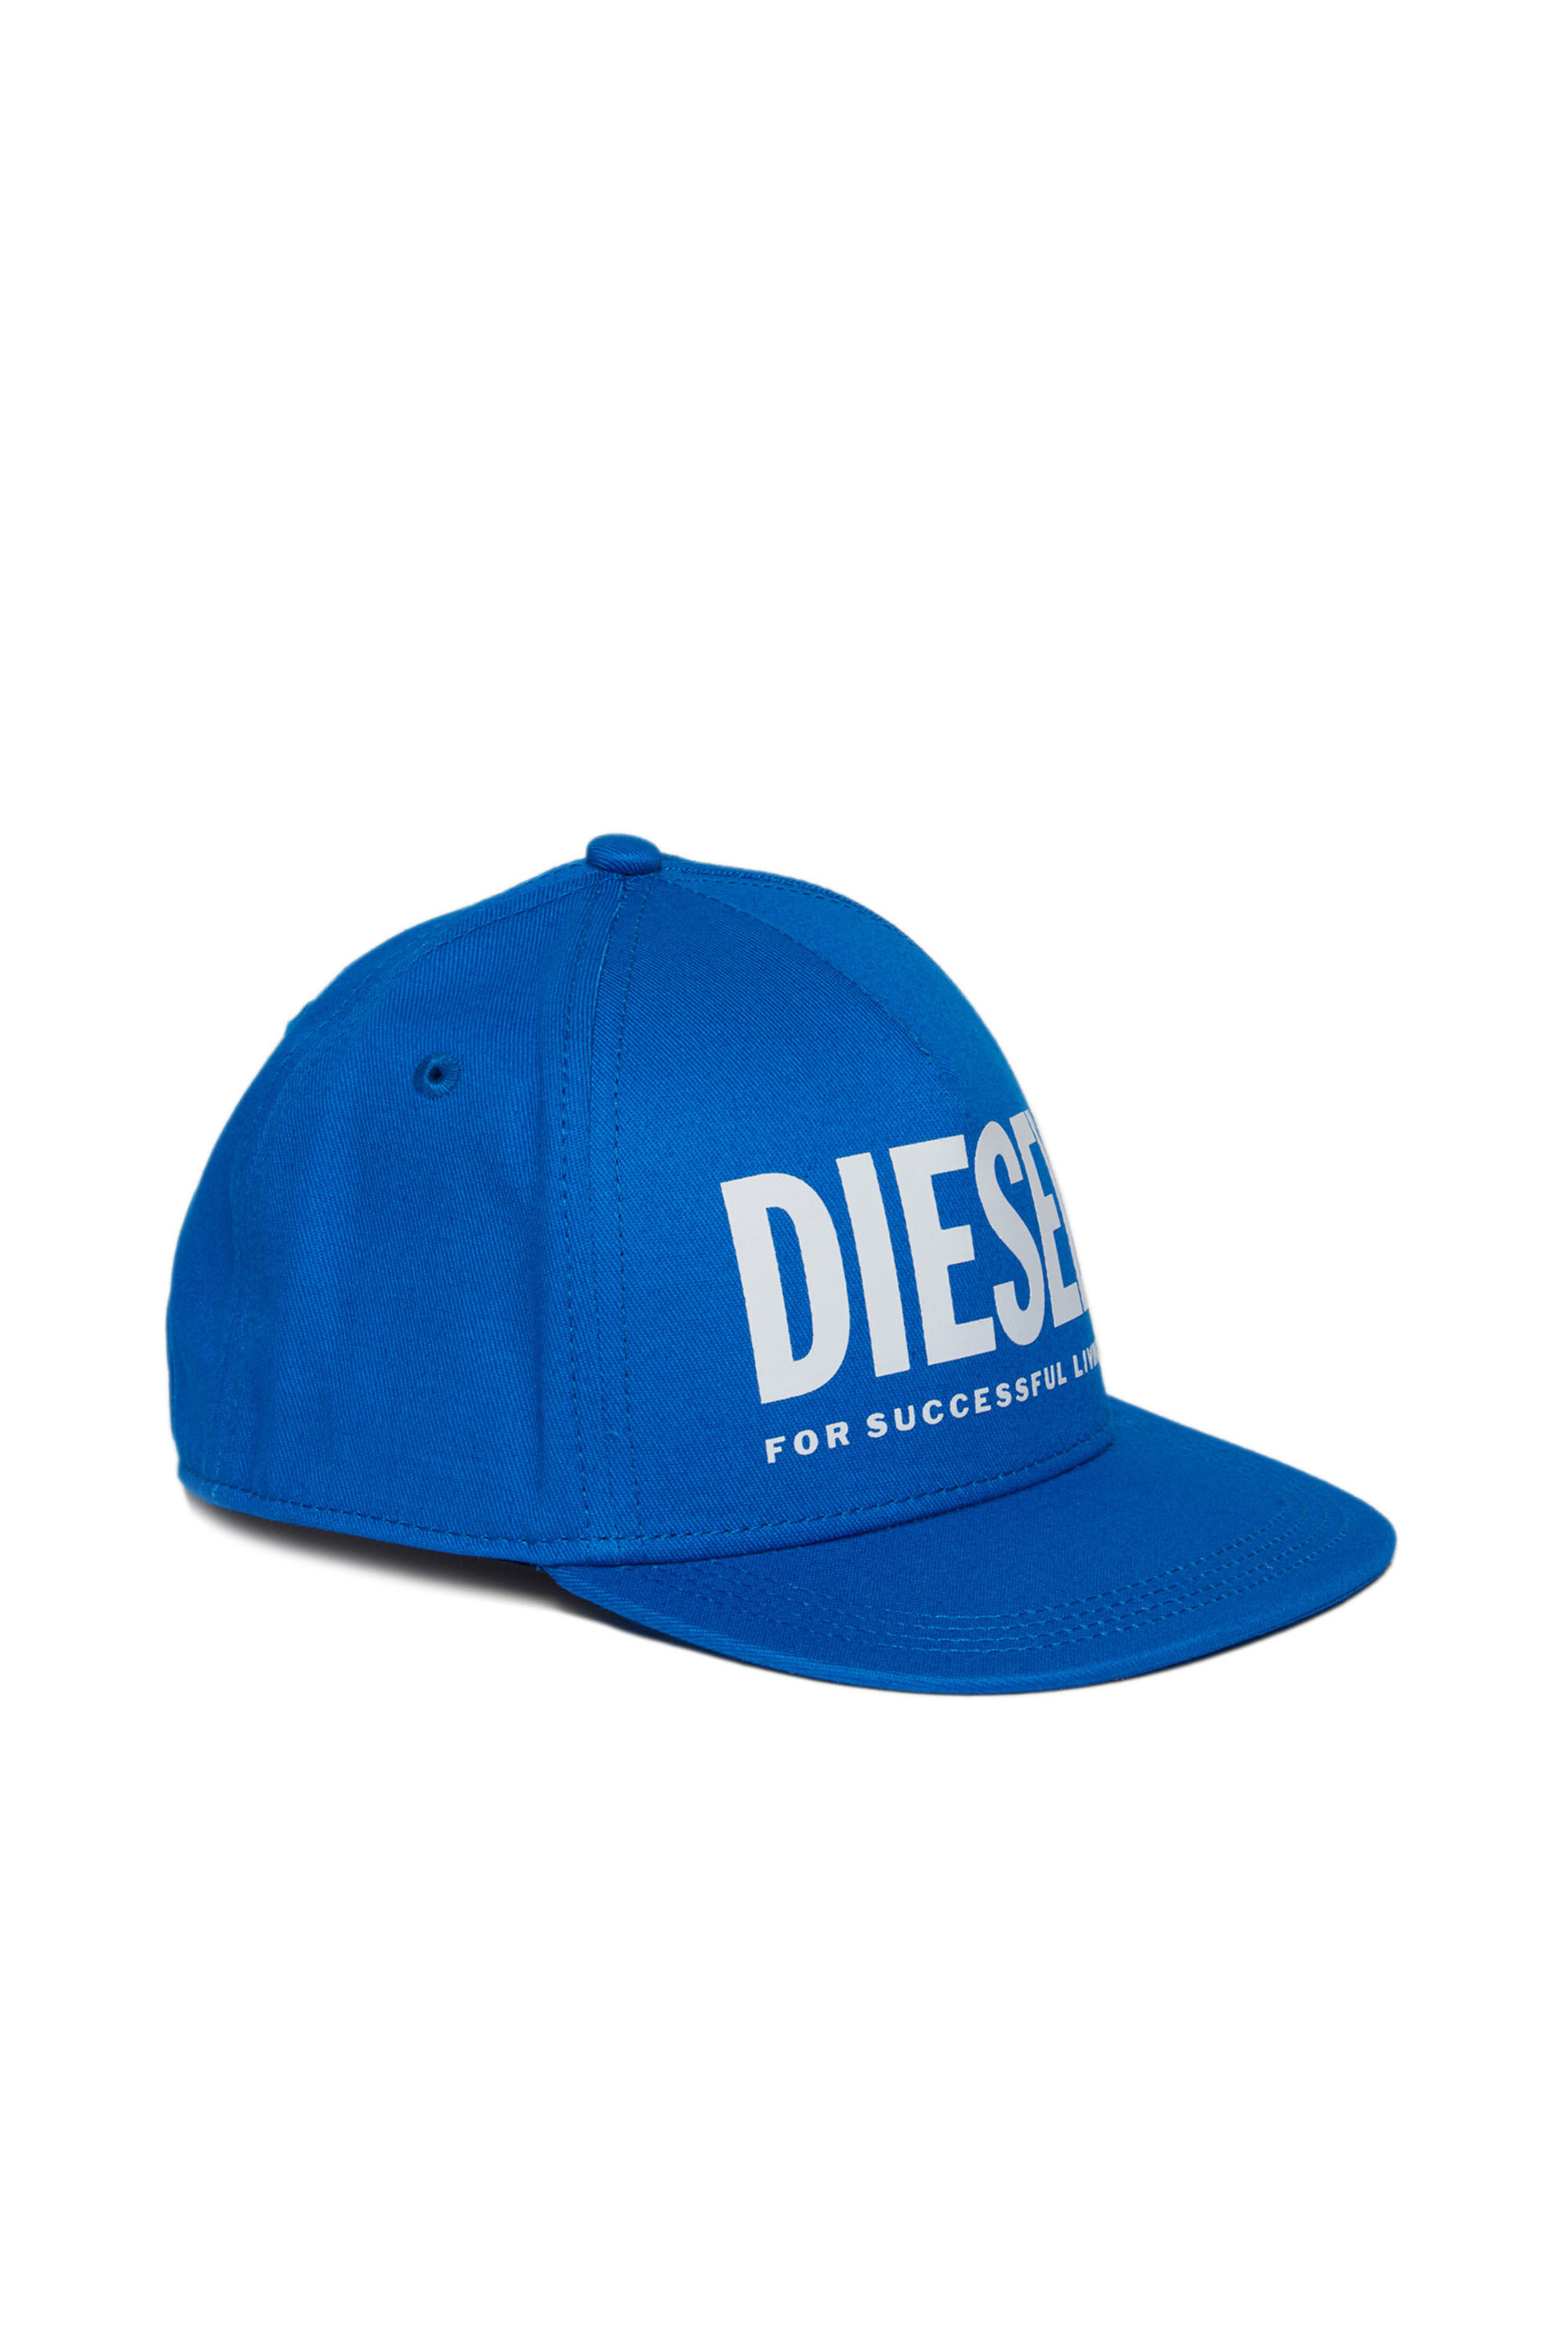 Diesel - FOLLY, Bleu - Image 1